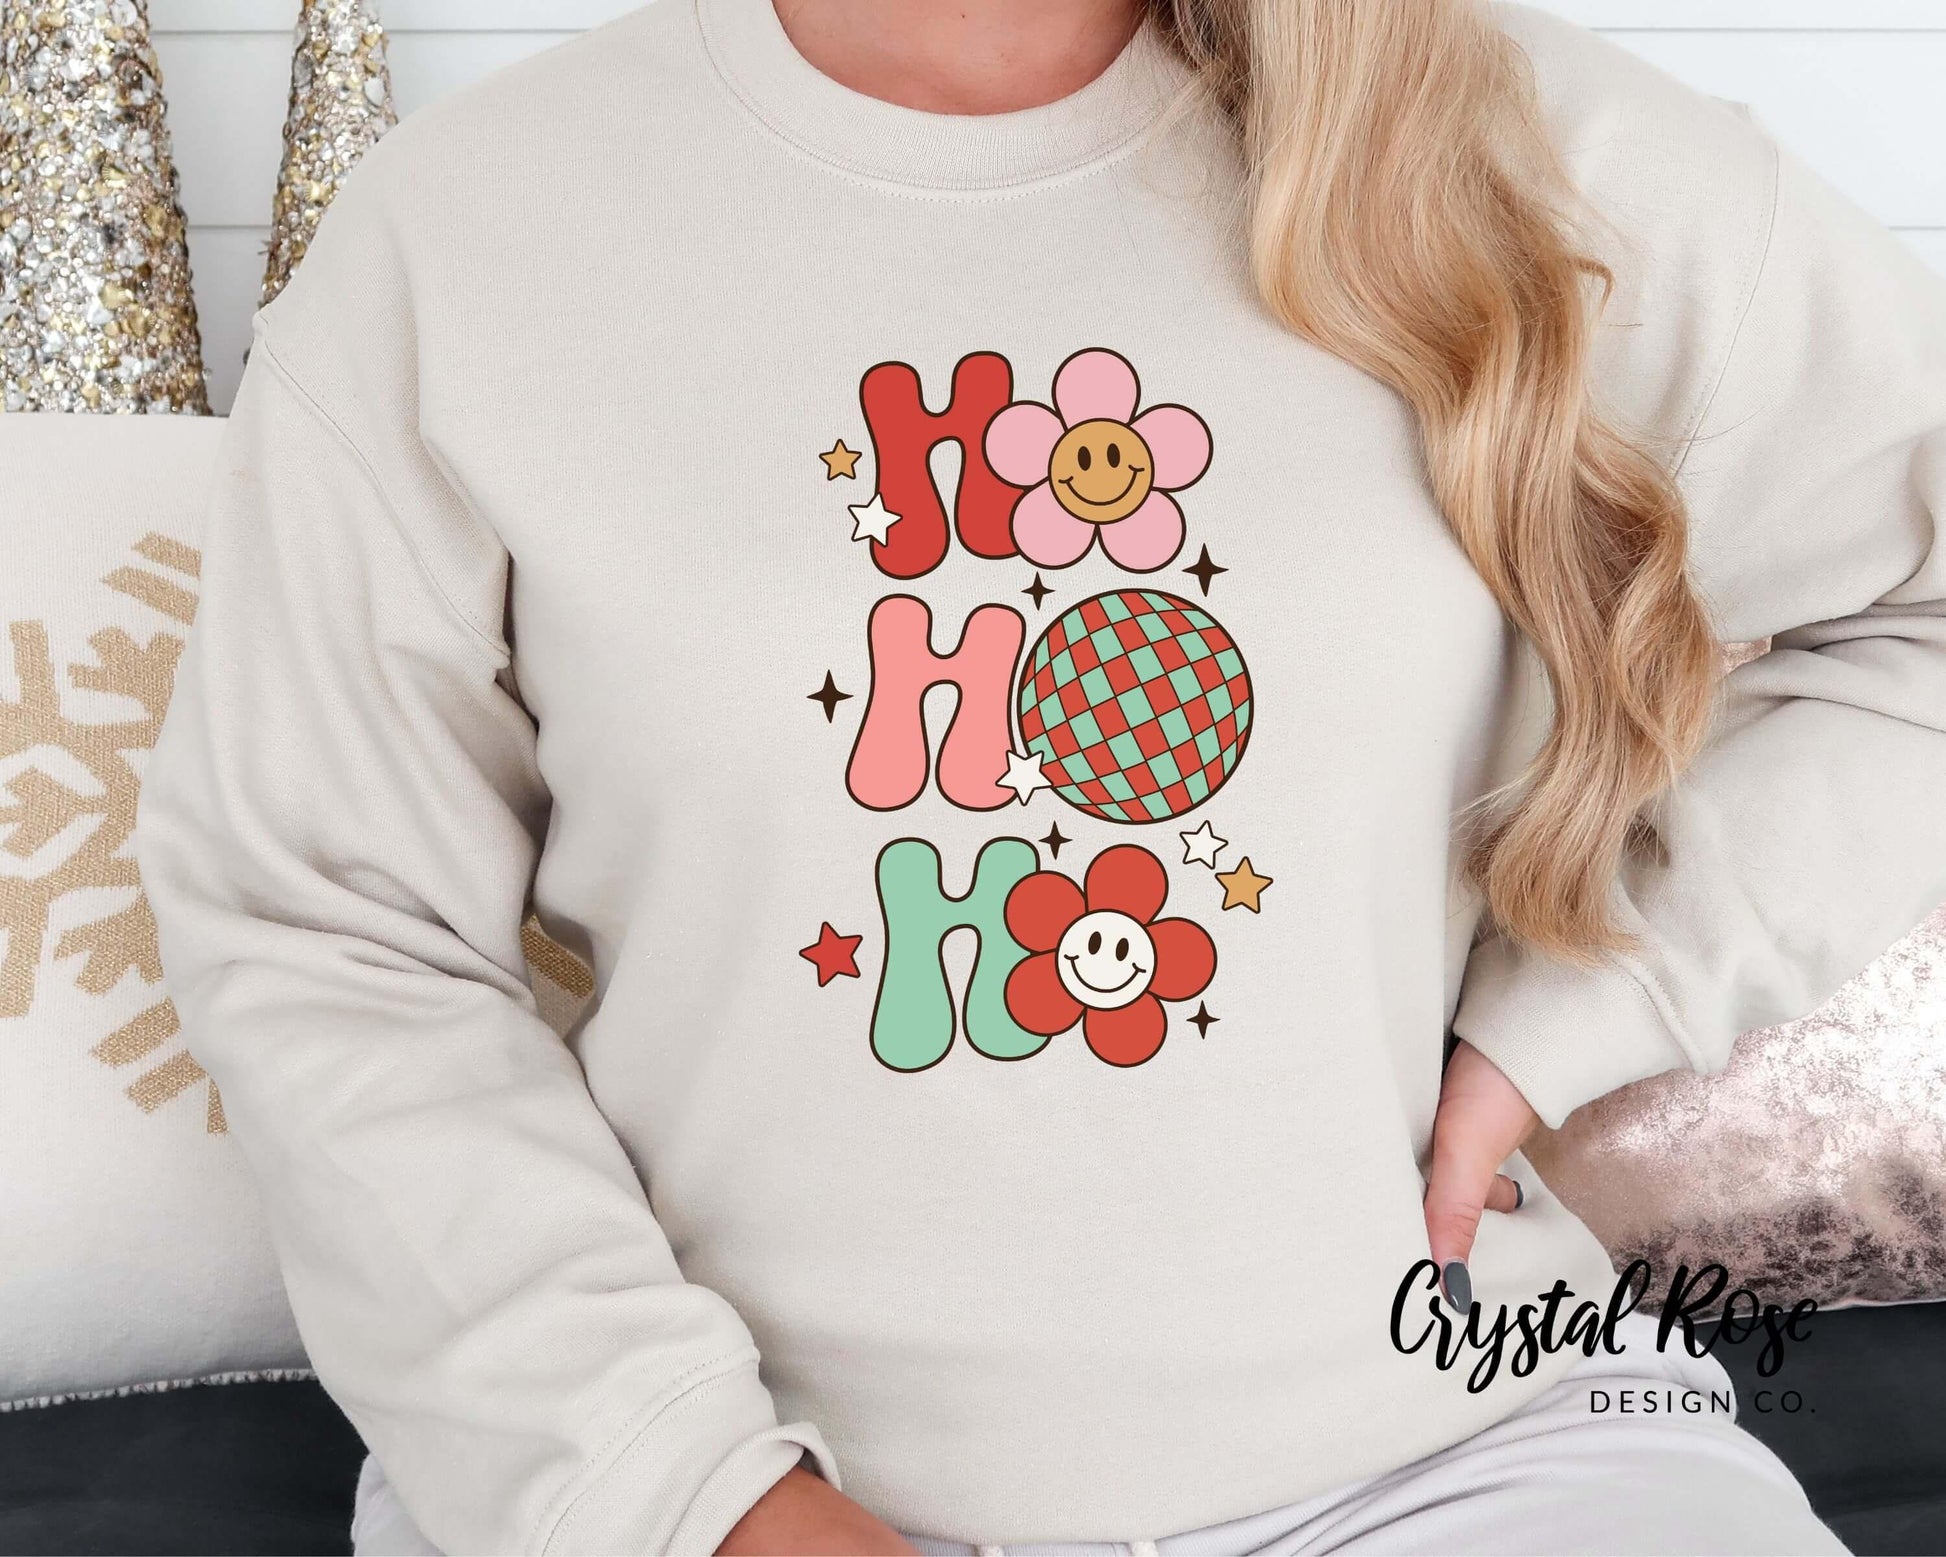 Retro Ho Ho Ho Christmas Crewneck Sweater - Crystal Rose Design Co.